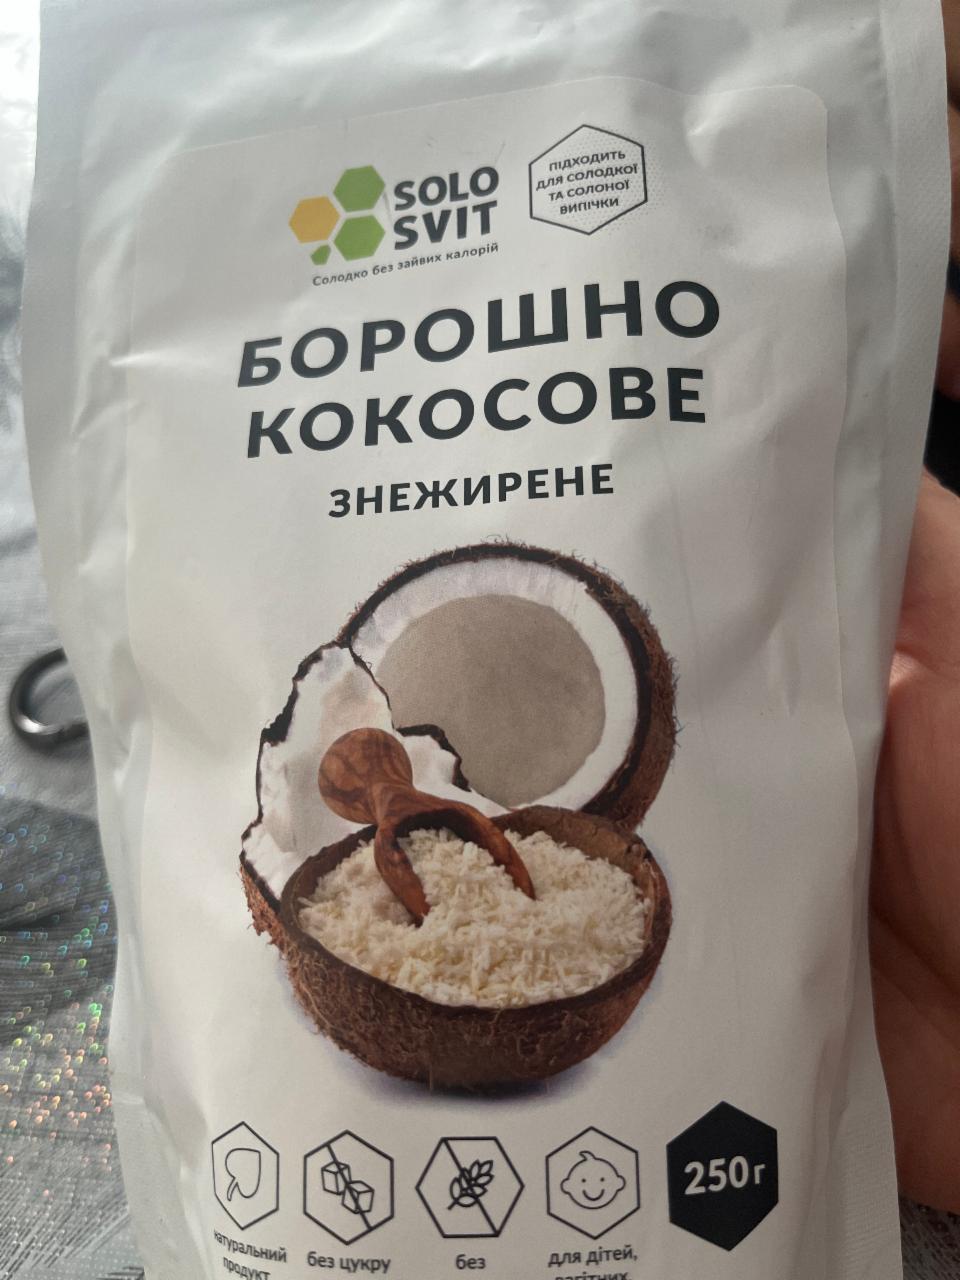 Фото - Борошно кокосове знежирене Solosvit